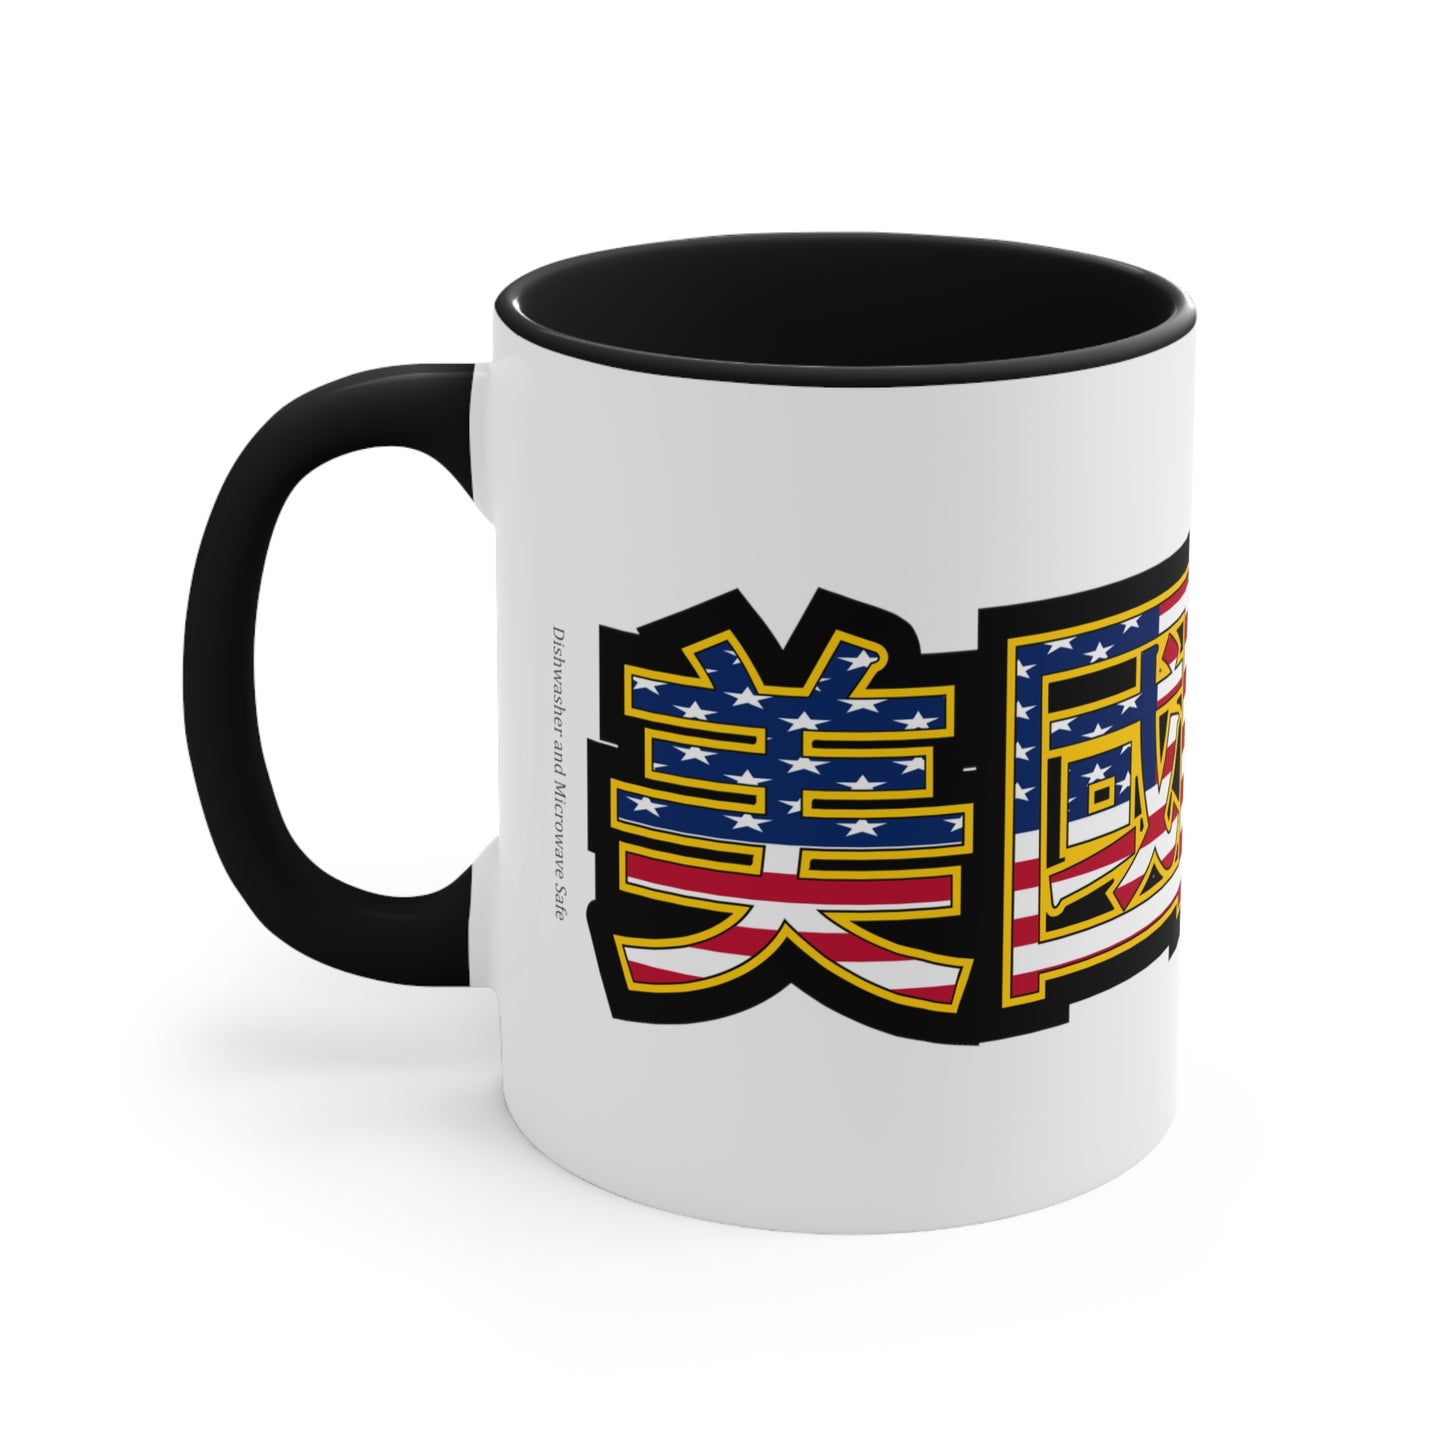 Made in America... in Chinese Coffee Mug